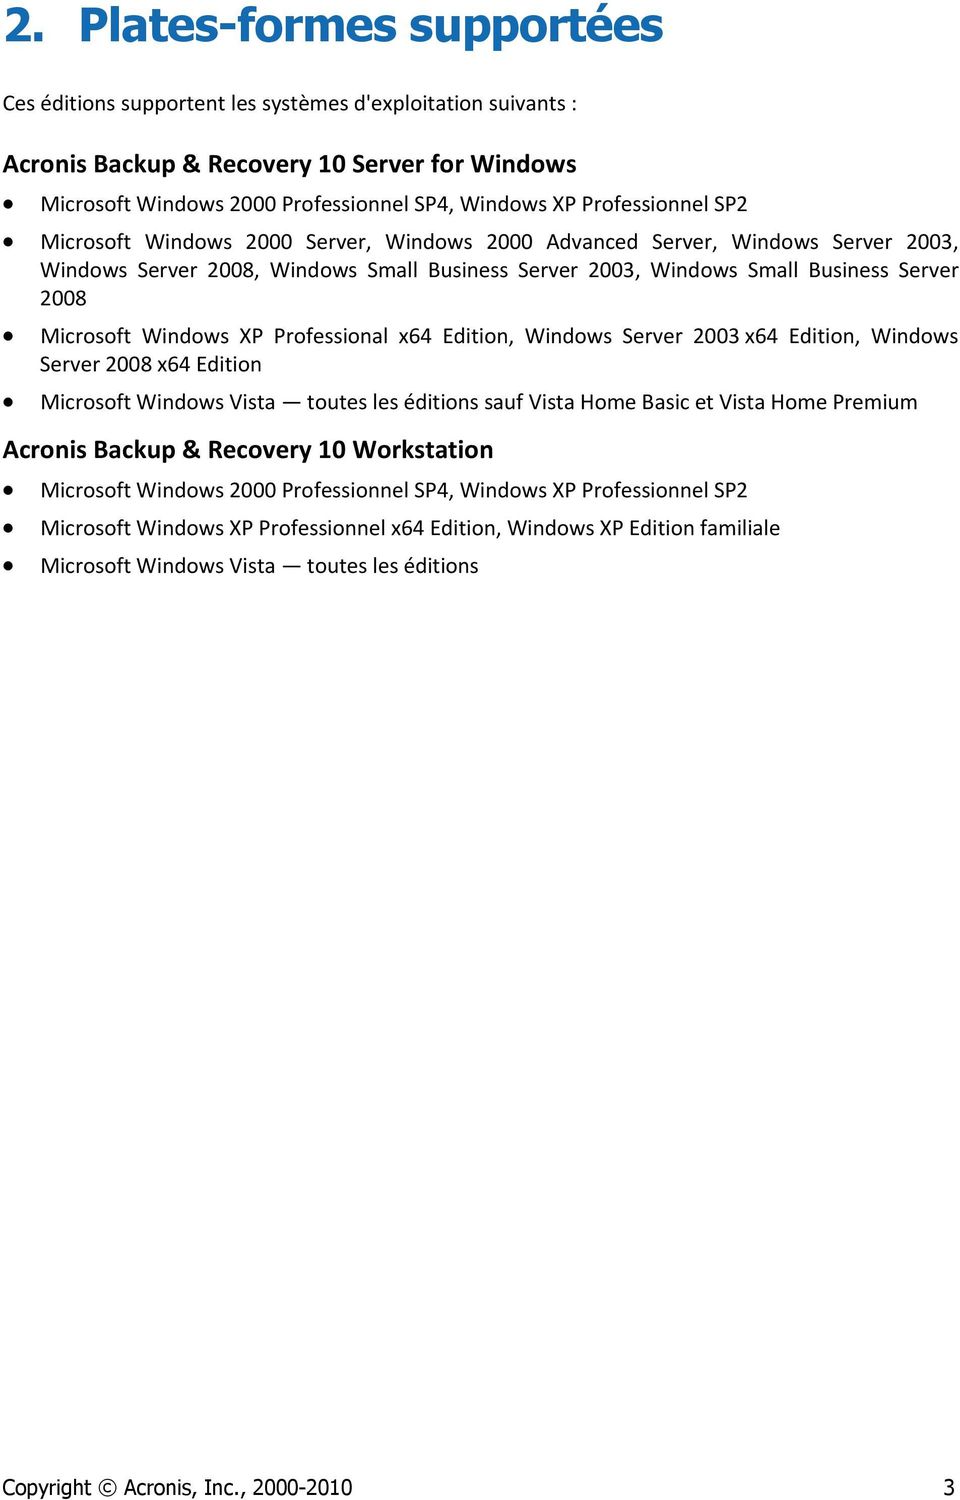 Microsoft Windows XP Professional x64 Edition, Windows Server 2003 x64 Edition, Windows Server 2008 x64 Edition Microsoft Windows Vista toutes les éditions sauf Vista Home Basic et Vista Home Premium